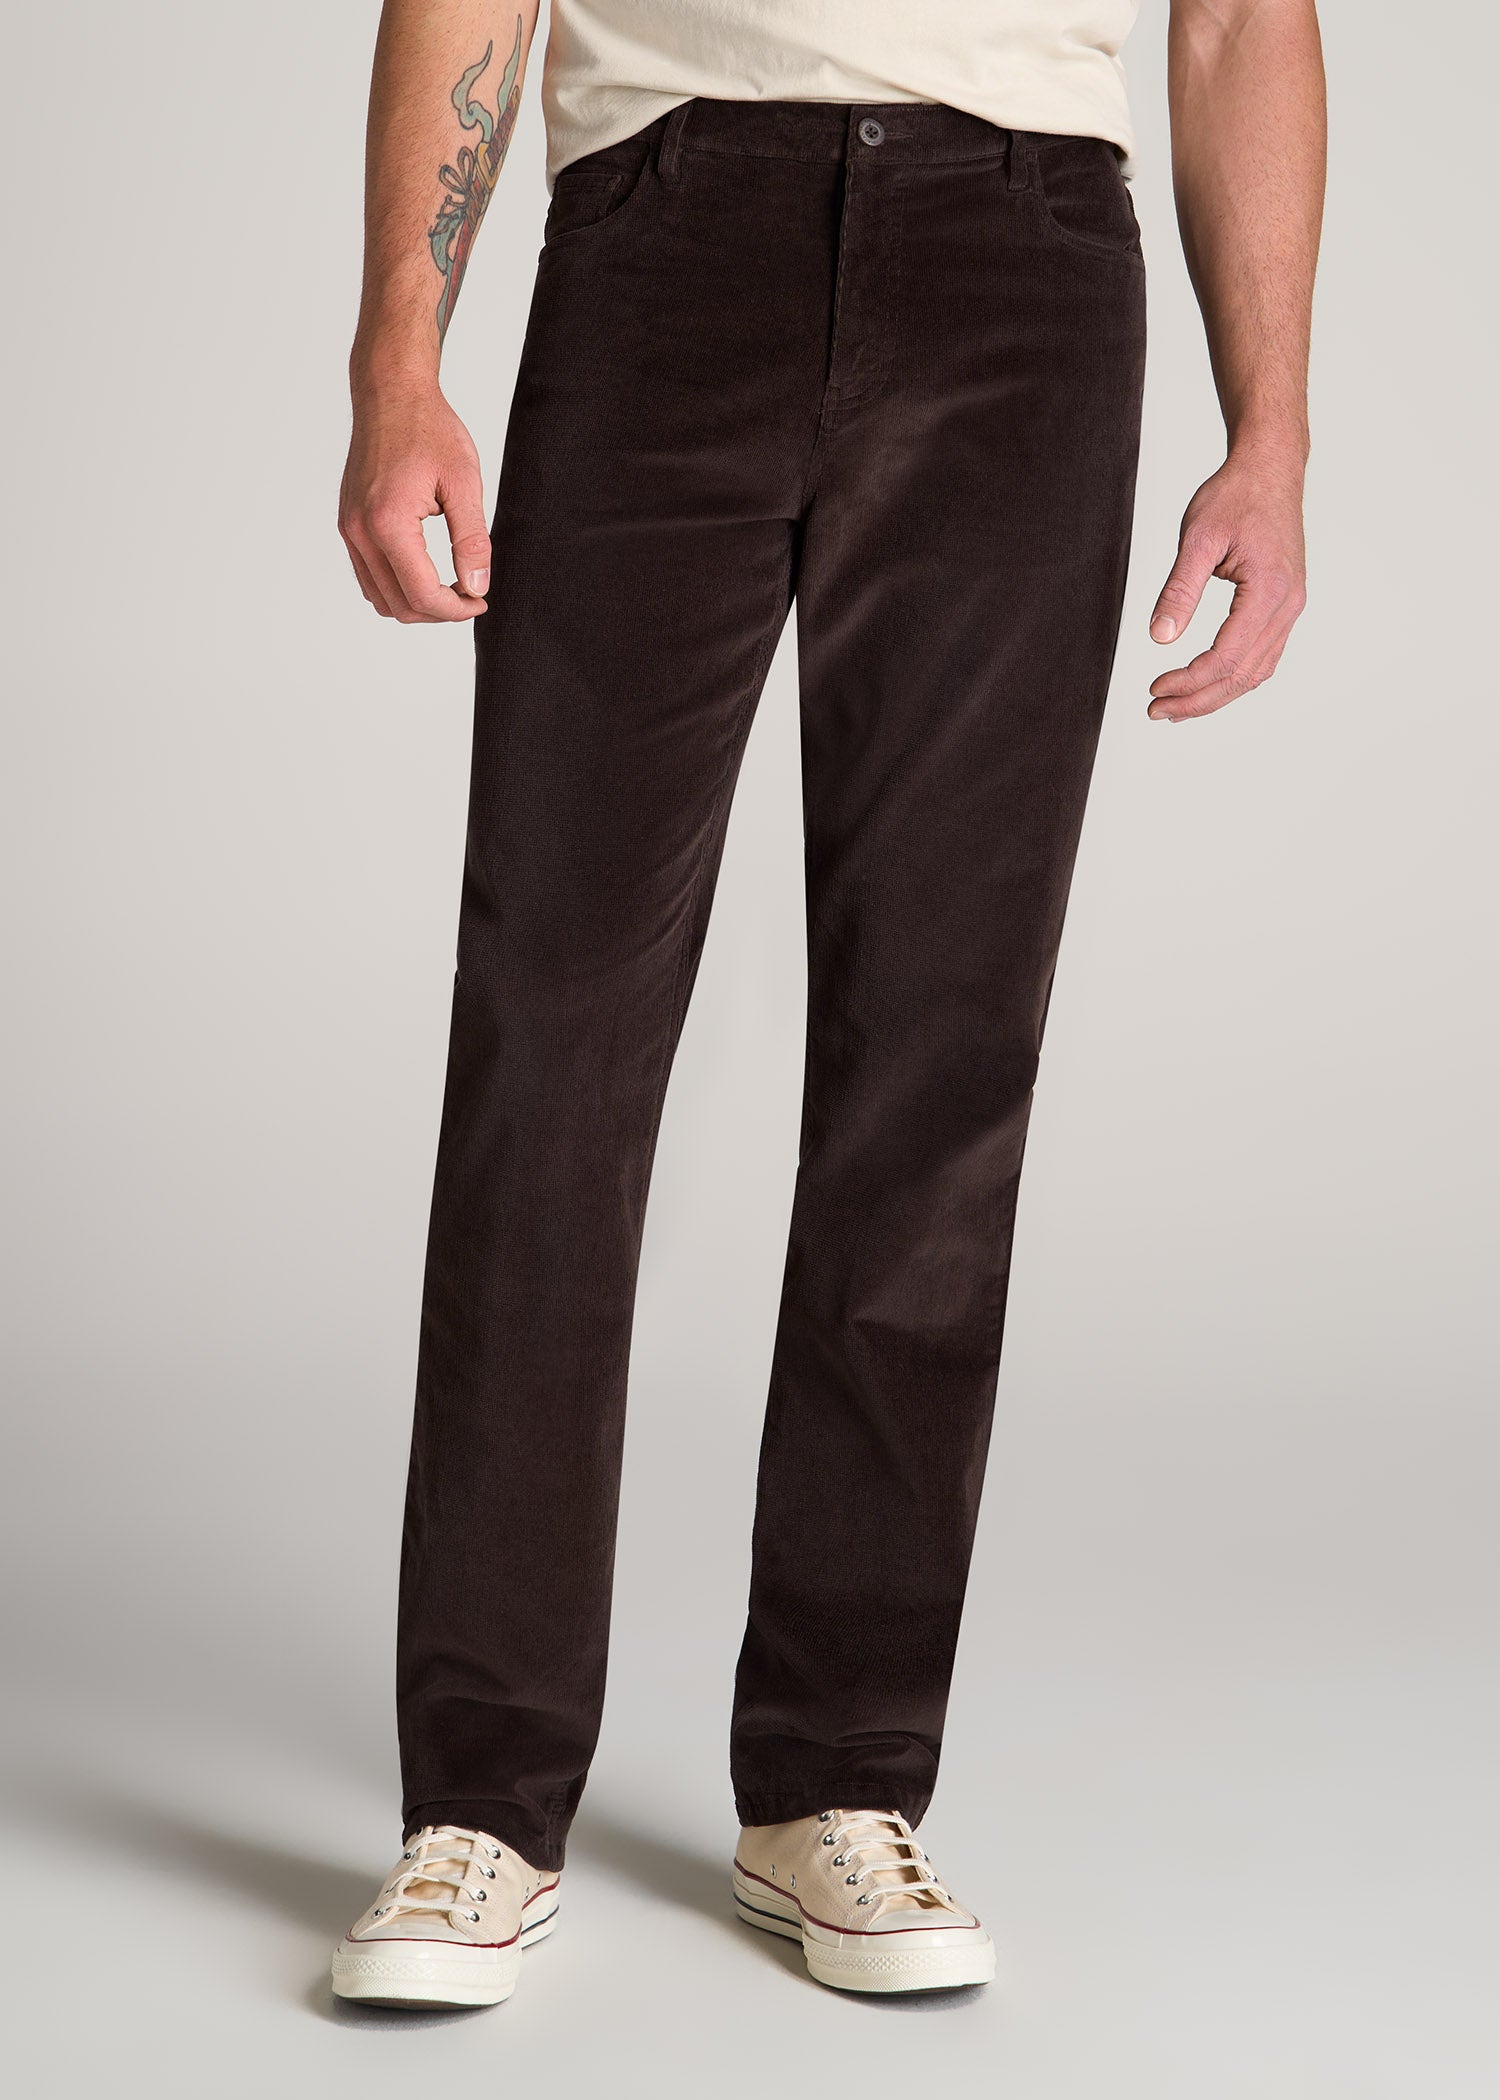 American-Tall-Men-J1-Stretch-Corduroy-5-Pocket-Pant-Chocolate-front